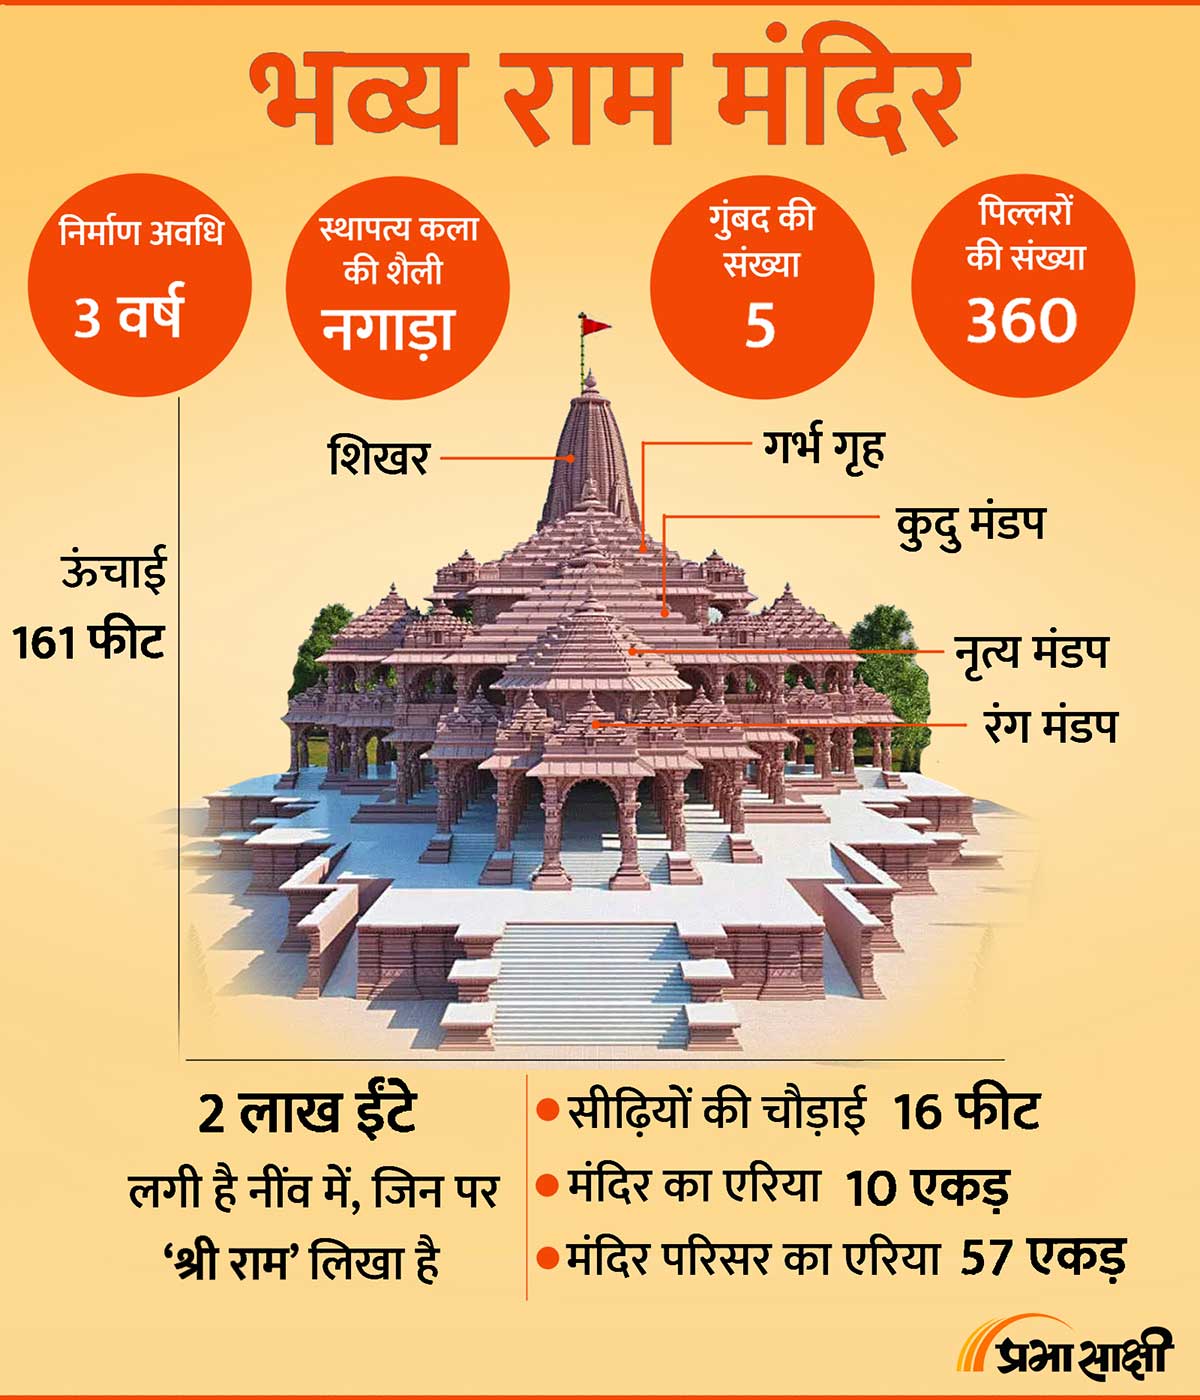 Know about Ram Mandir in Ayodhya